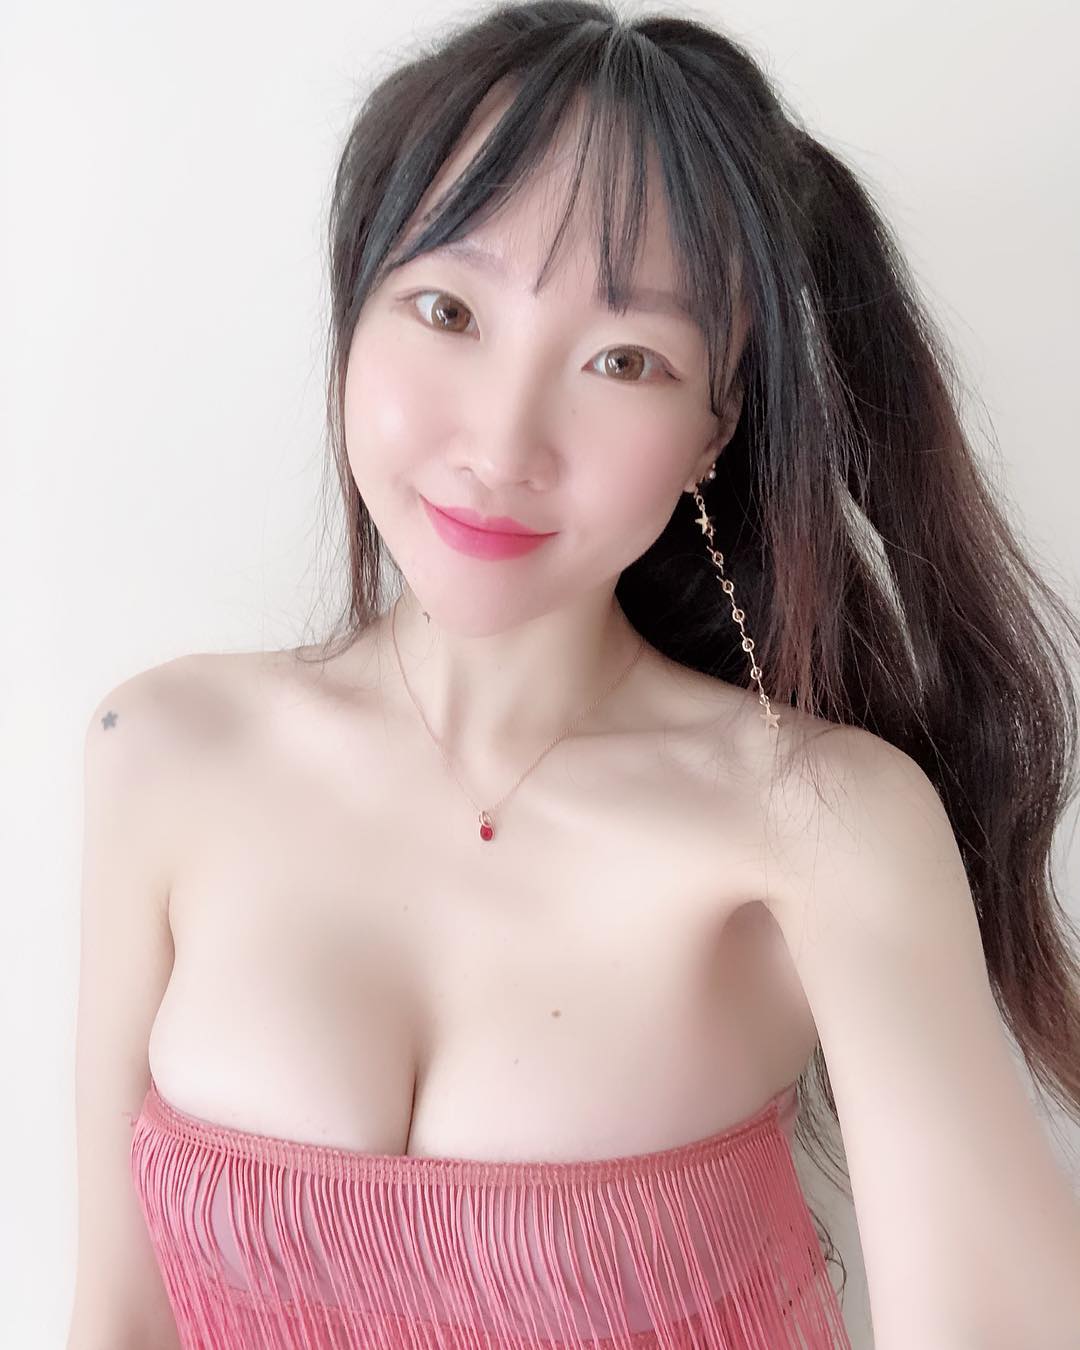 Korean Girl Nahna Bikini Pictures